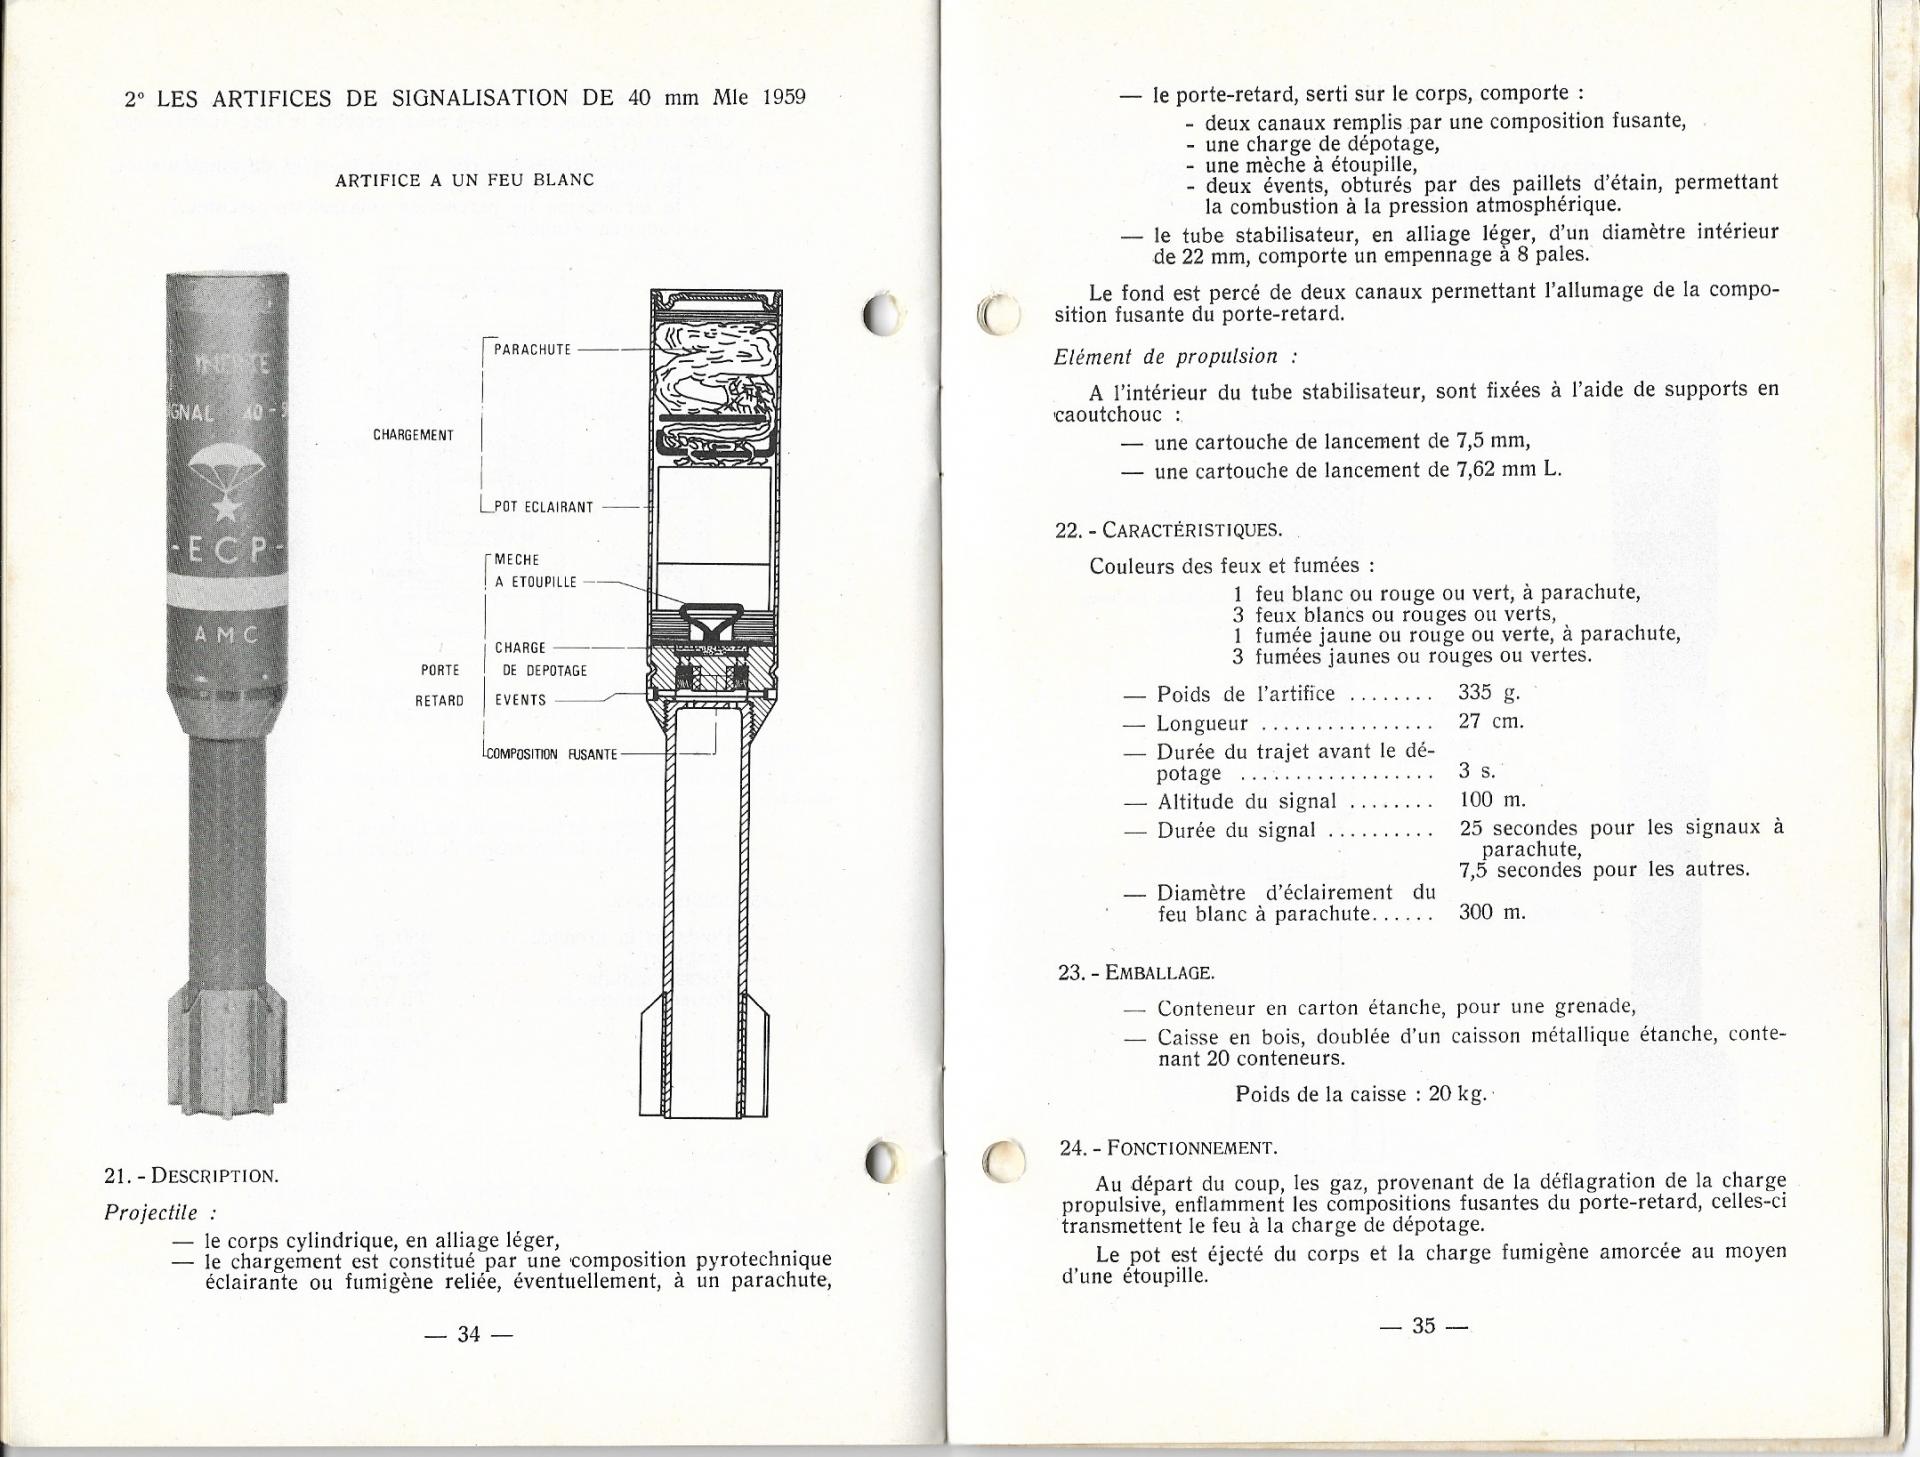 Grenades a fusil inf 401 2 1966 p34 35